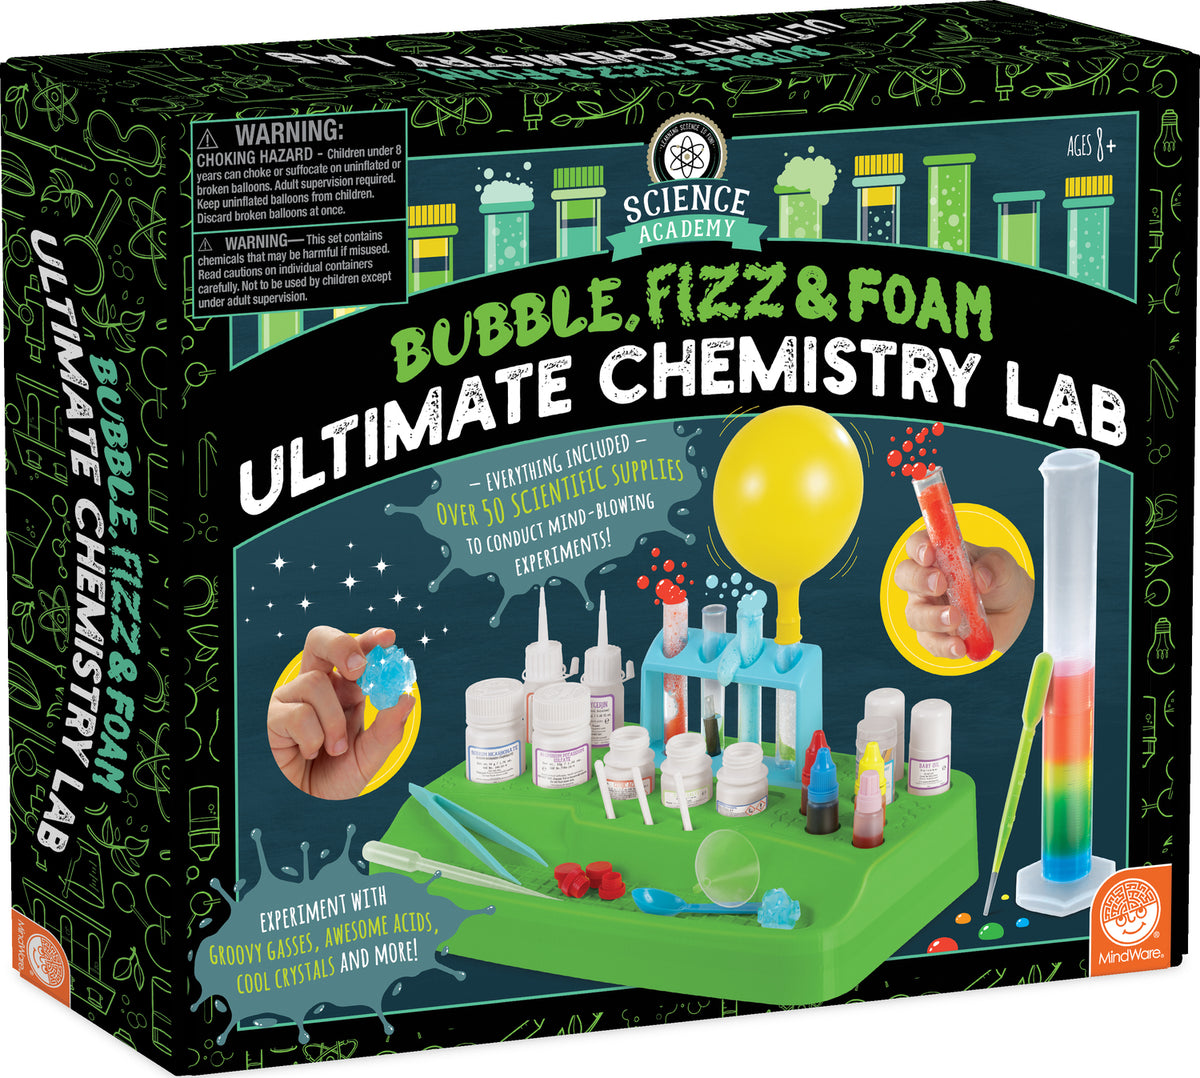 Bubble, Fizz, & Foam Ultimate Chemistry Lab Cover